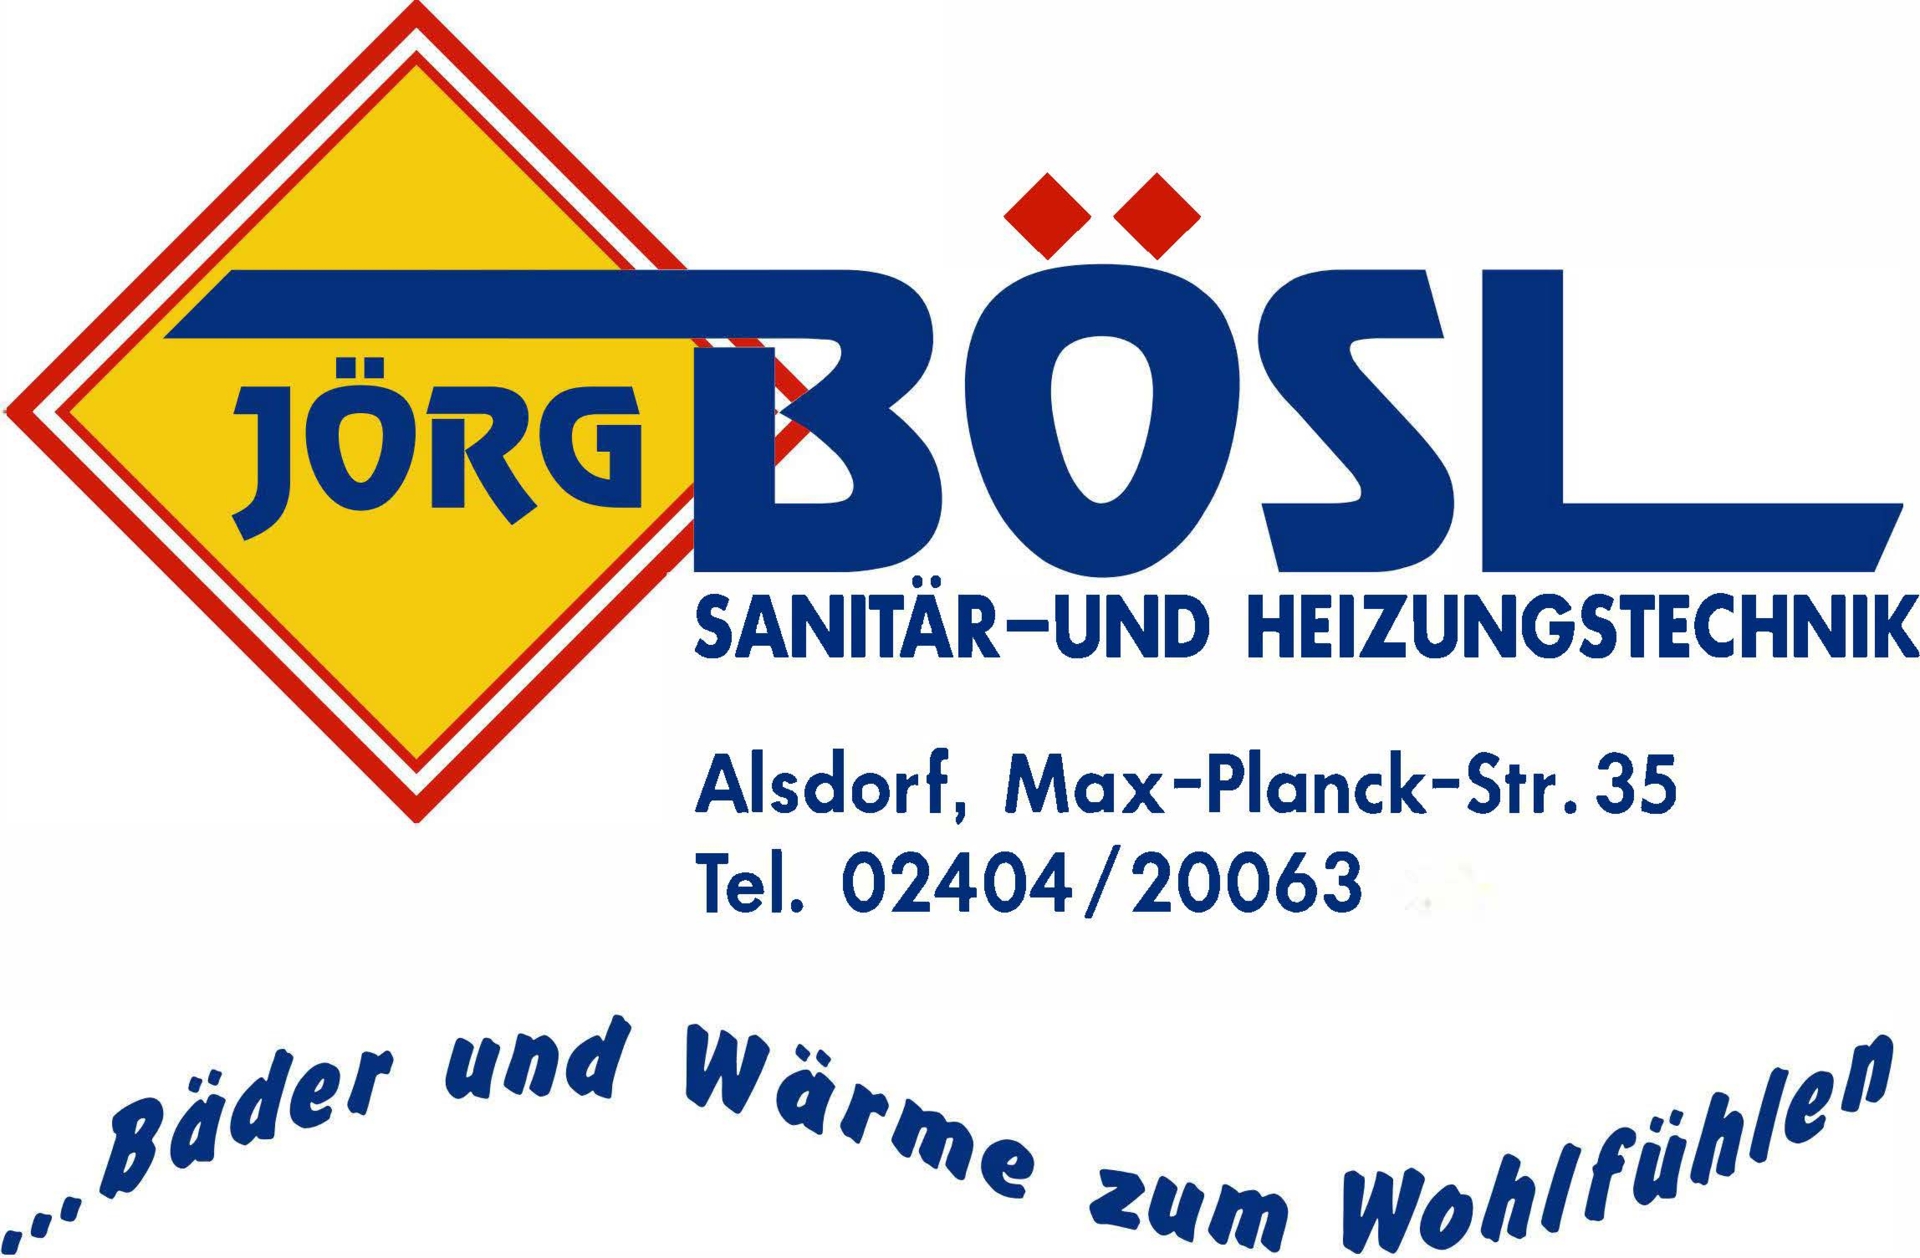 Boesl-joerg3_01 20063